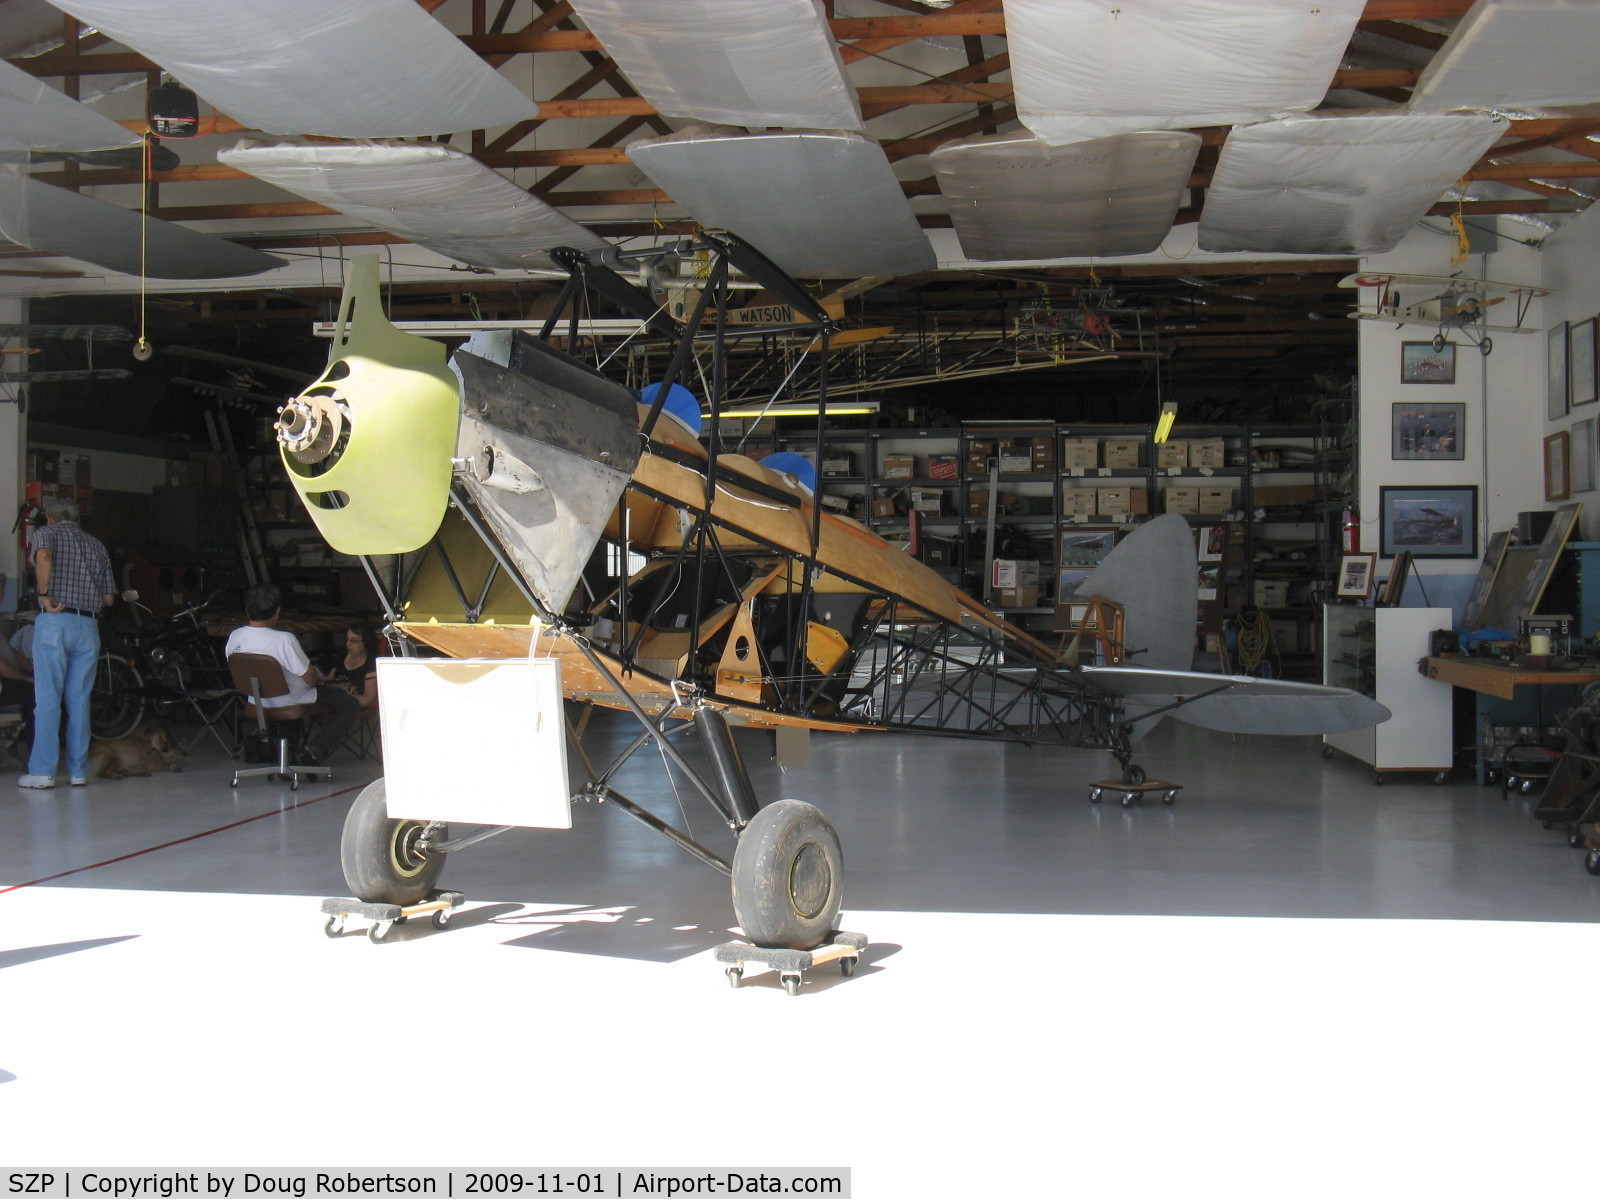 Santa Paula Airport (SZP) - 1927 DeHavilland Gipsy Moth-received as gift-in the David Watson Aviation Museum of Santa Paula hangar